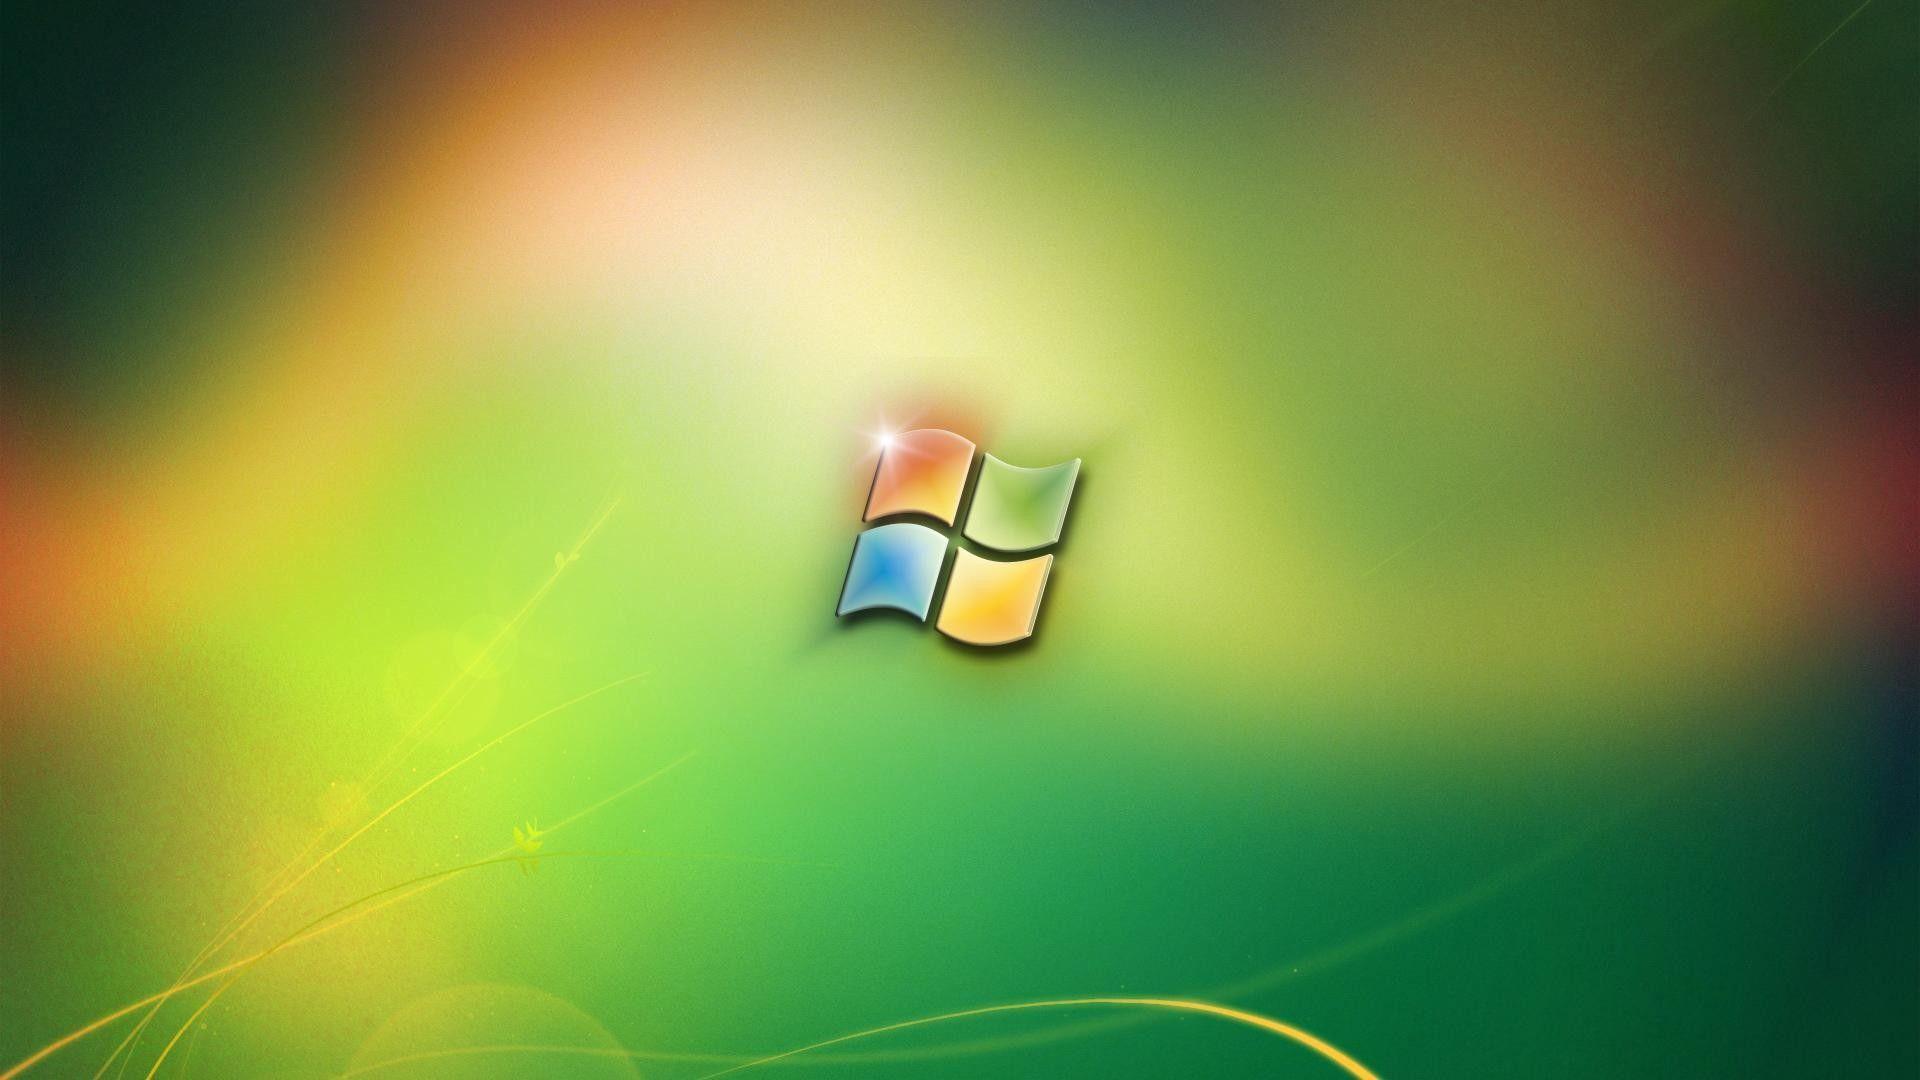 Windows Xp Wallpaper HD 1920x1080 (Picture)